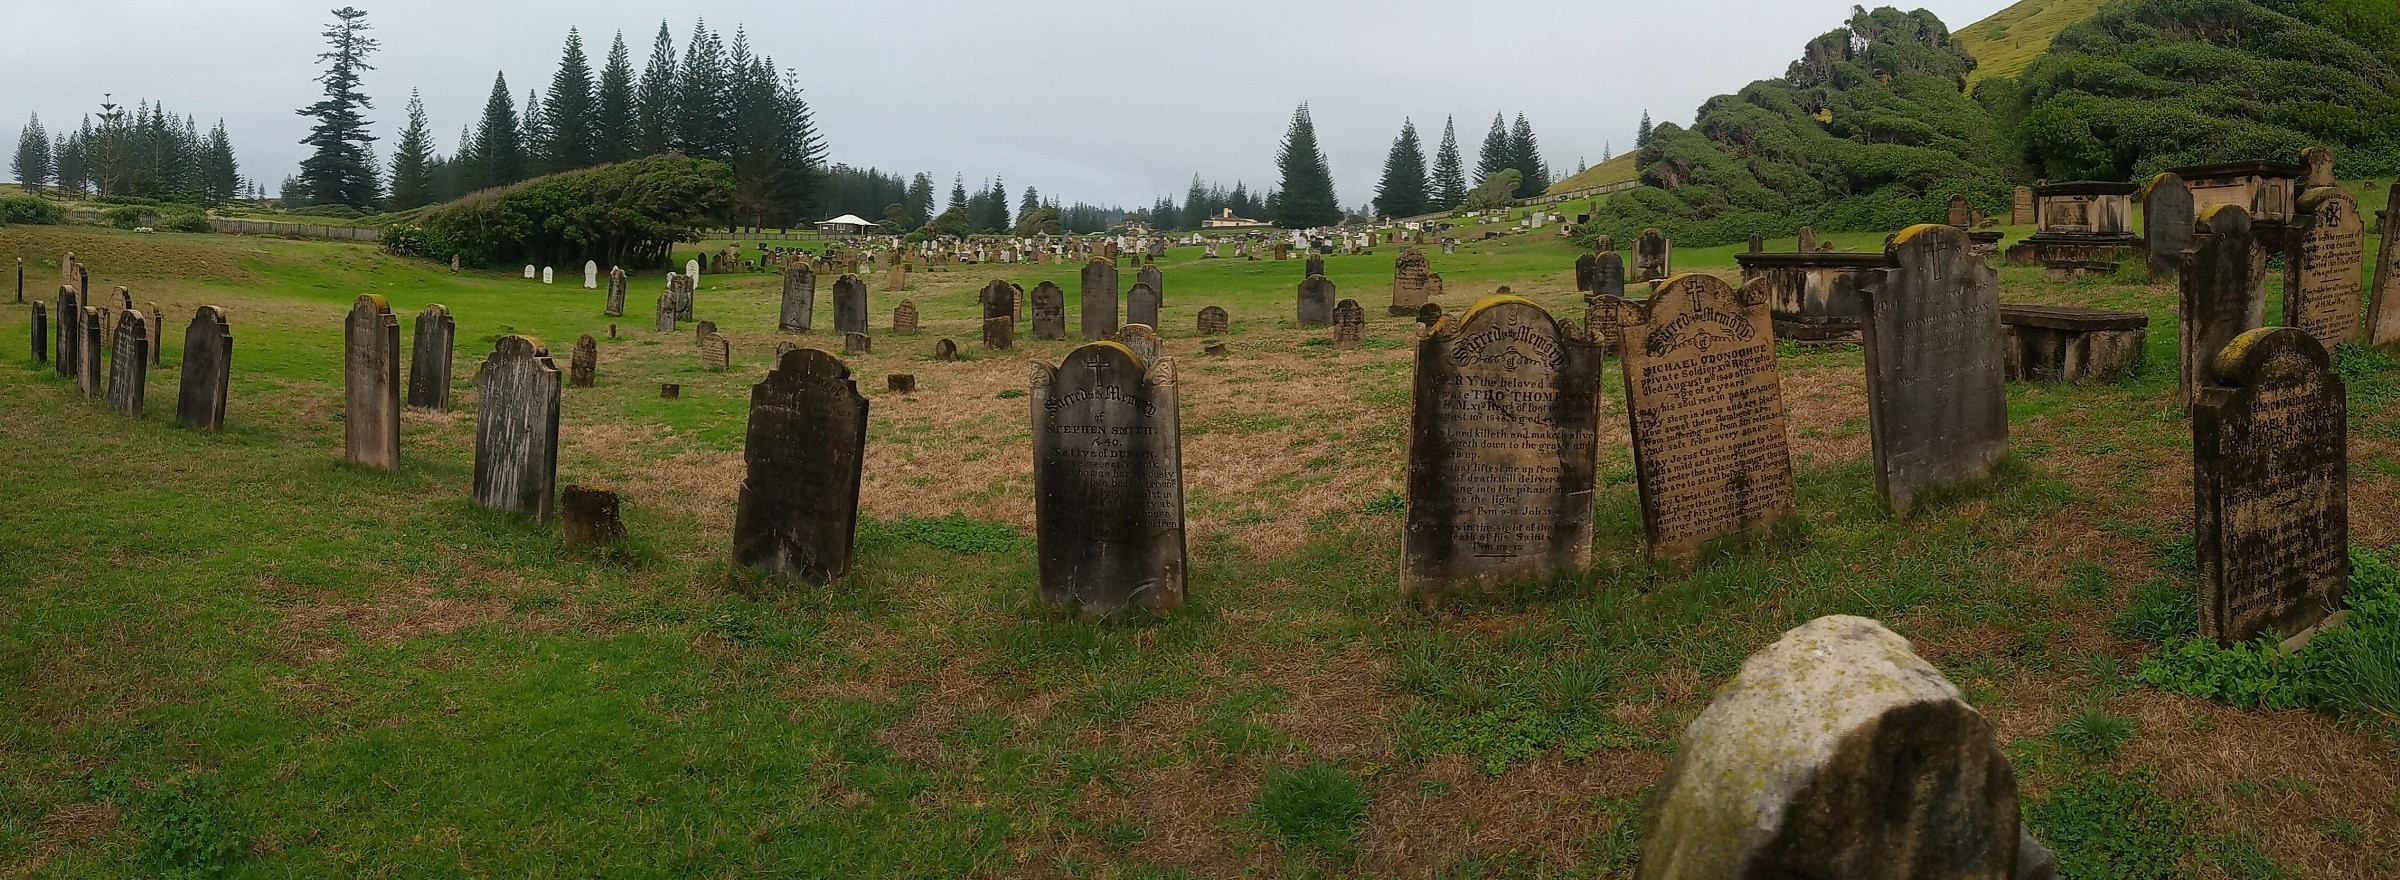 Kingston Cemetery